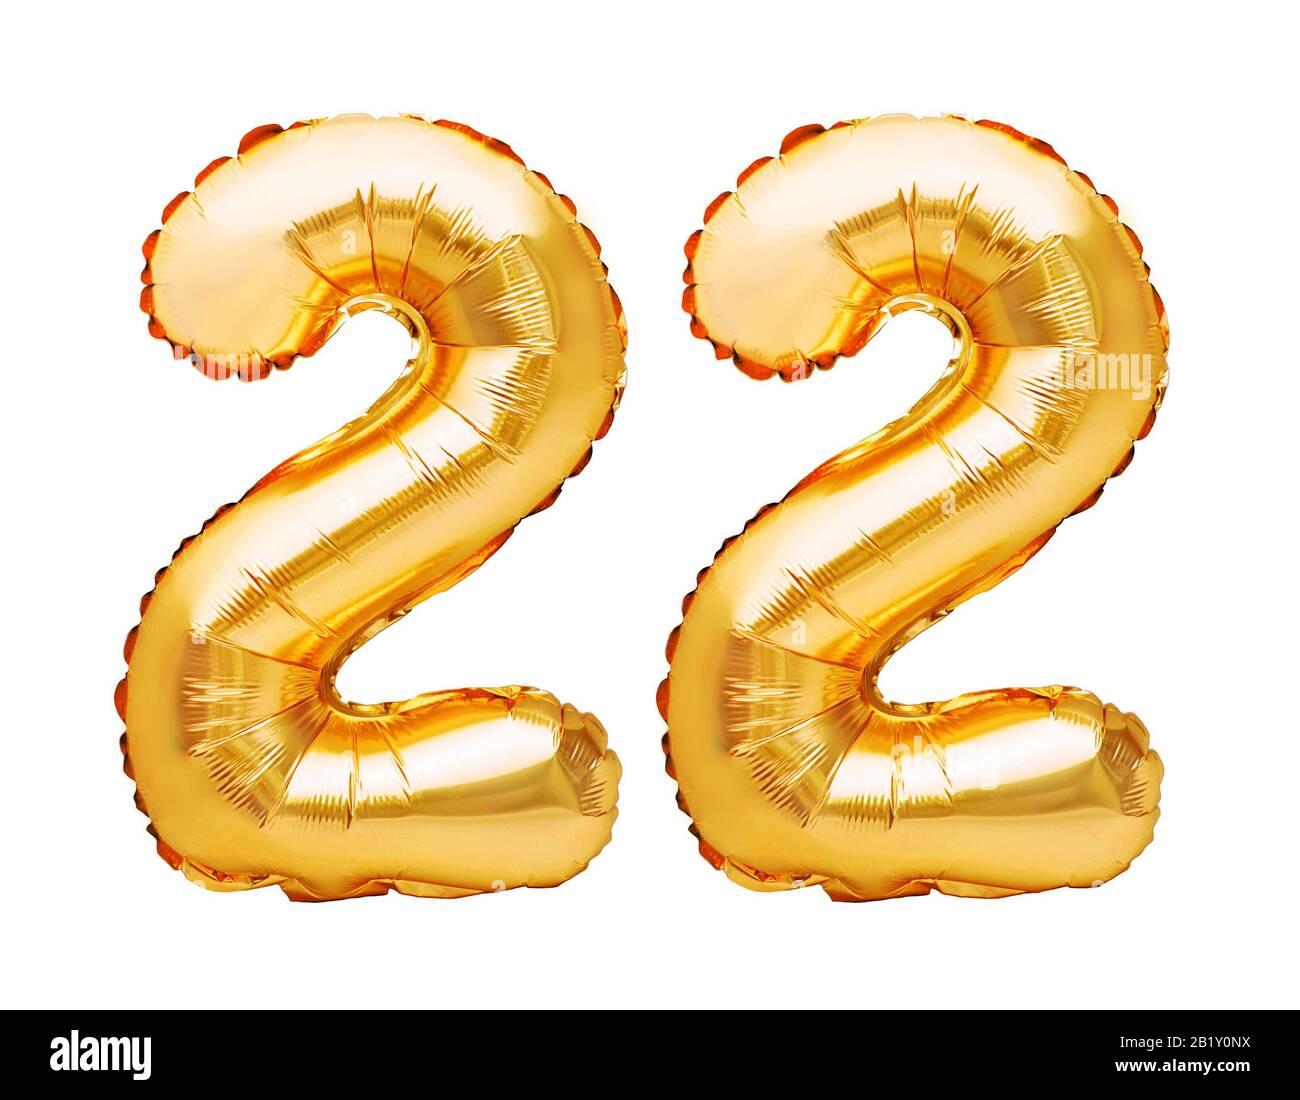 Número 22 veintidós hechos de globos inflables dorados aislados en blanco. Globos de helio, números de lámina de oro. Decoración de fiesta, signo de aniversario para Foto de stock